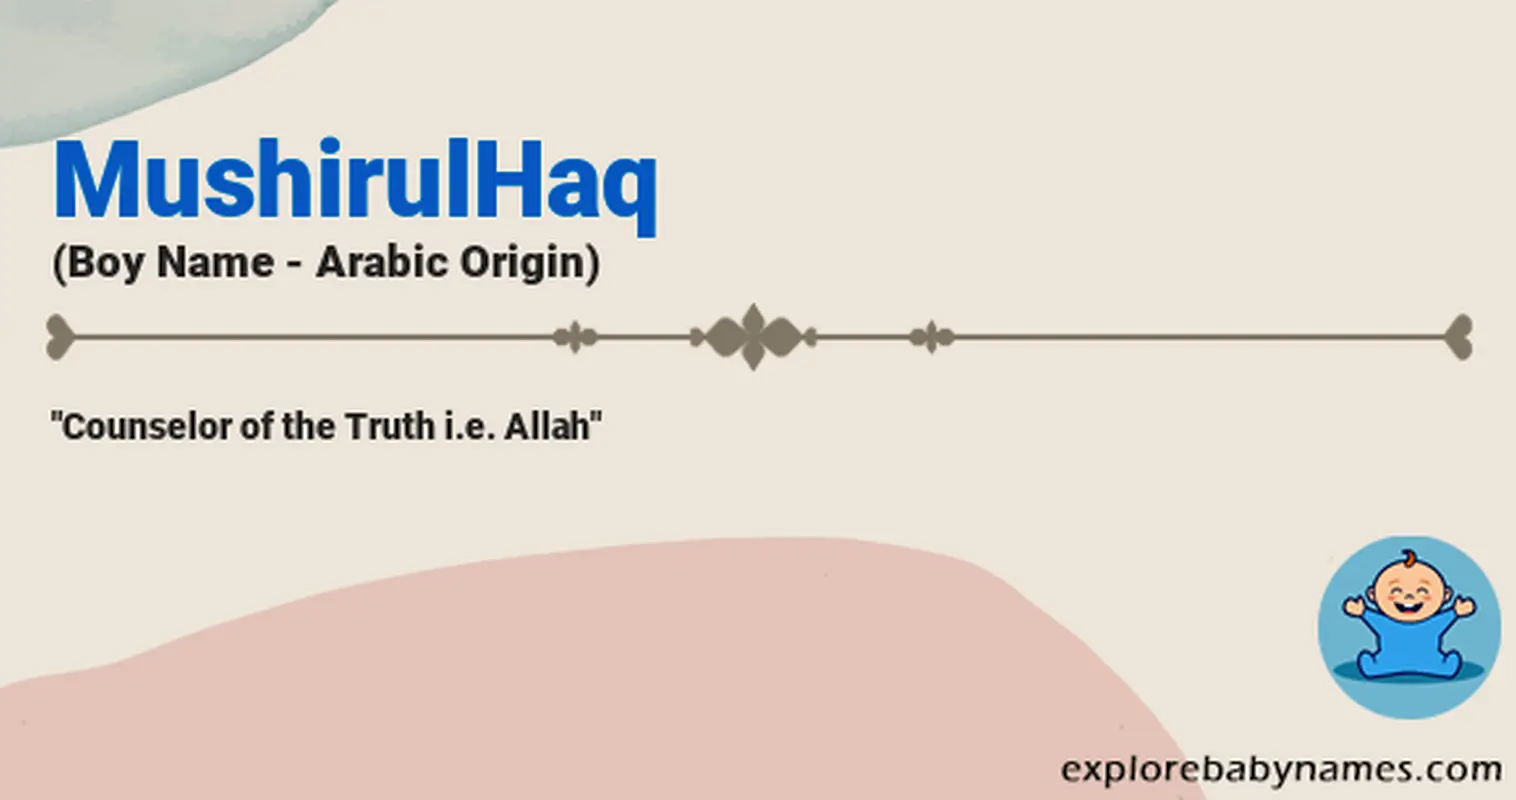 Meaning of MushirulHaq